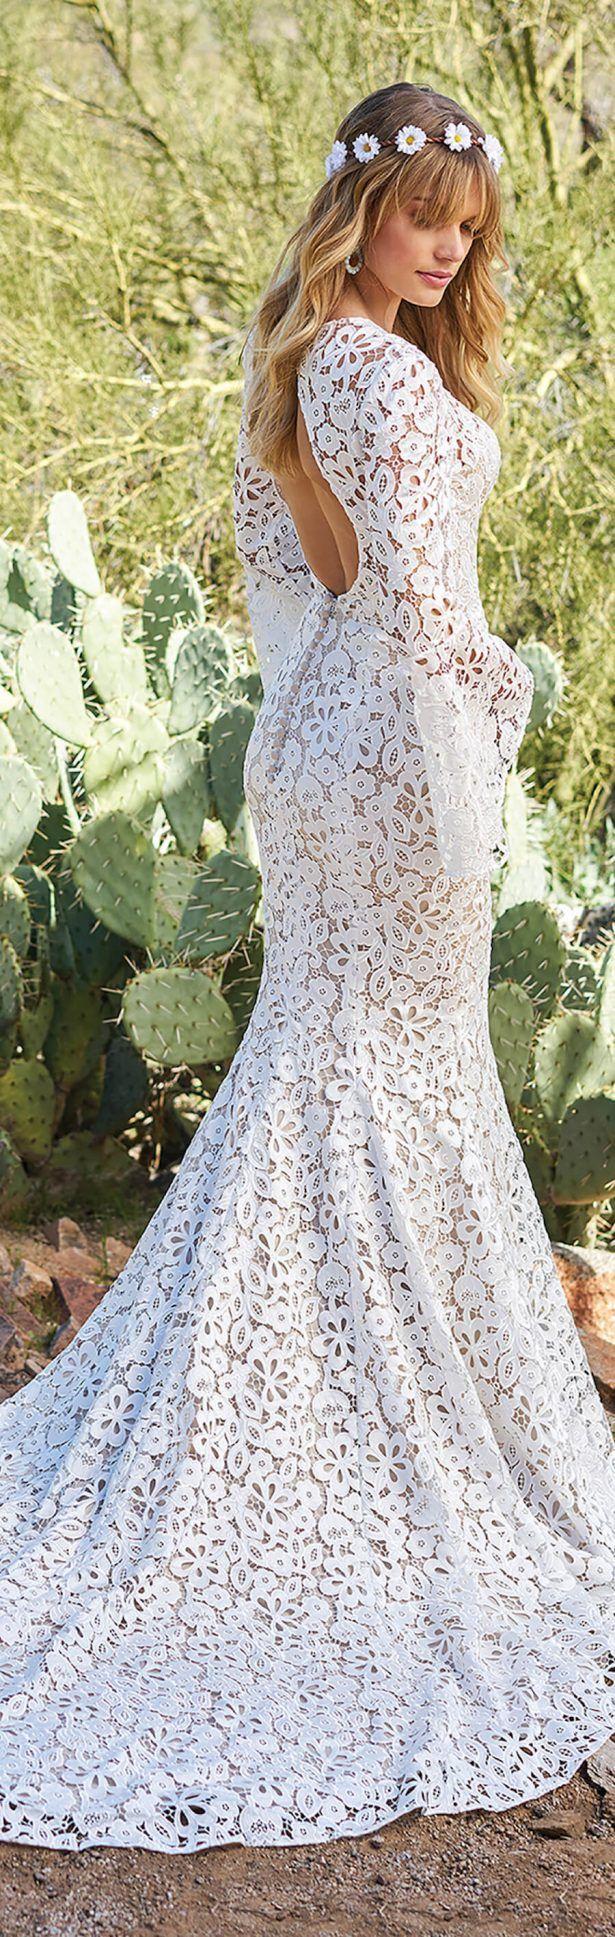 Wedding - Lillian West Wedding Dress Collection Spring 2018